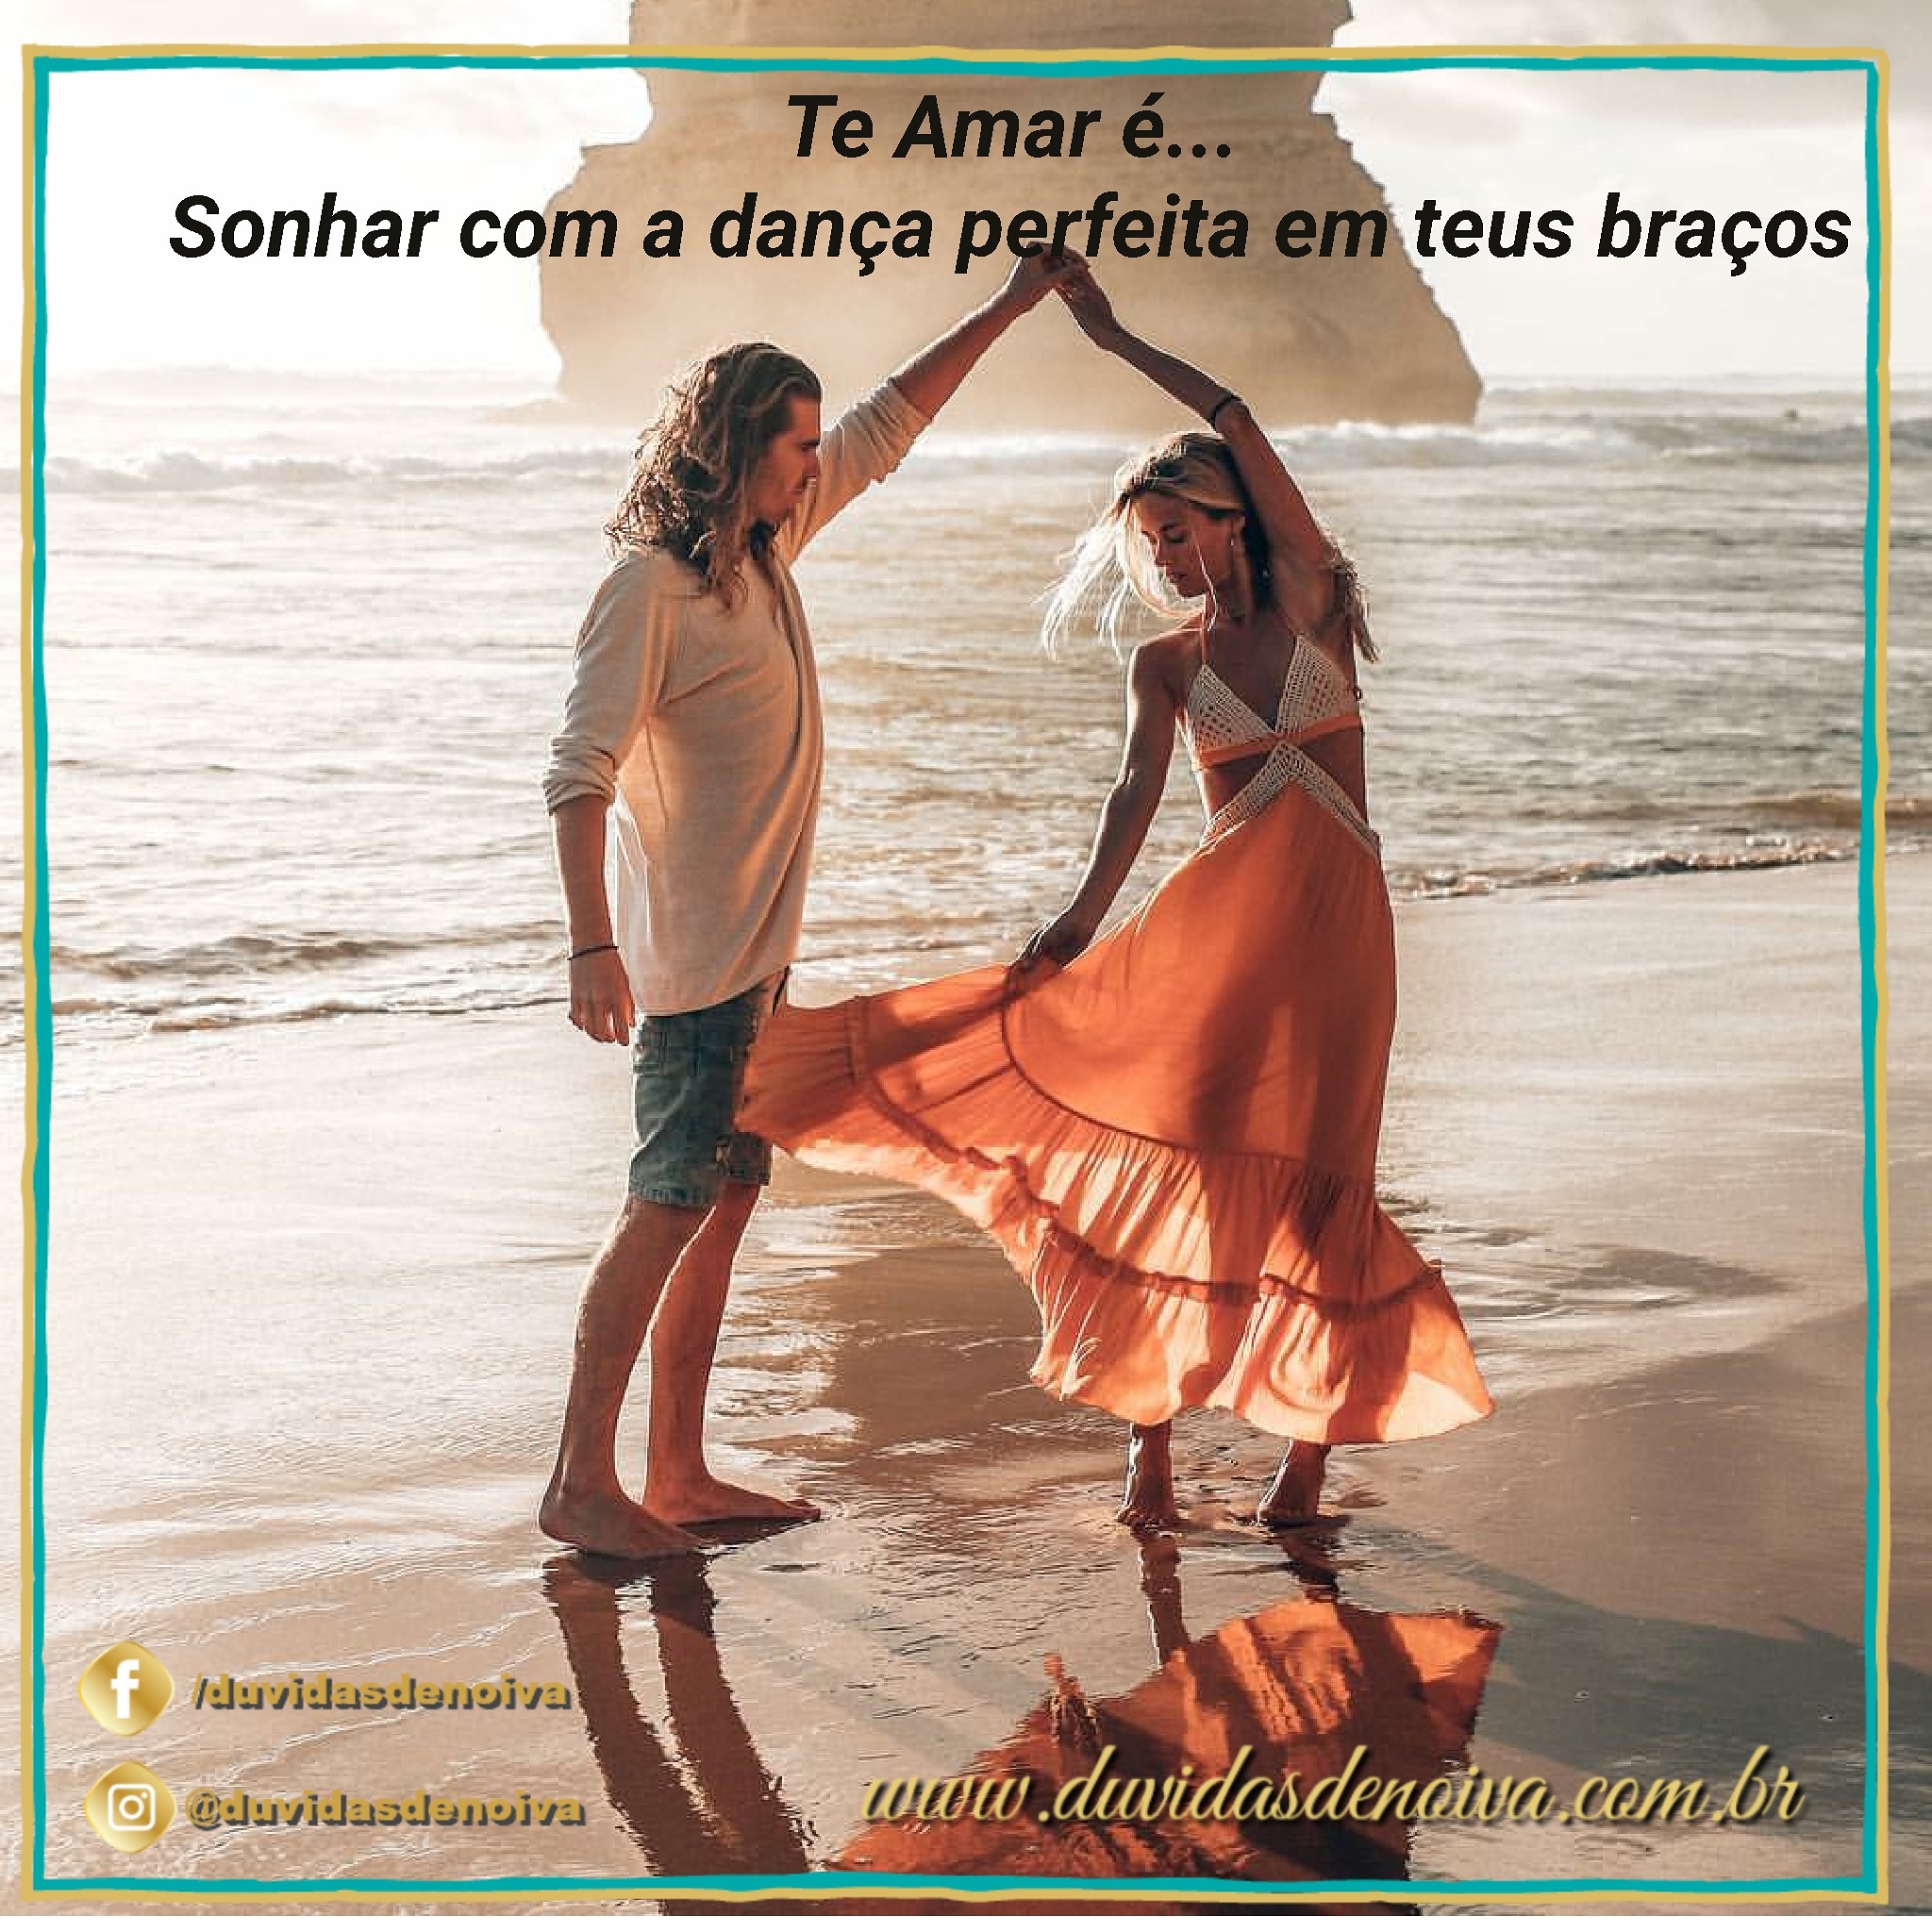 IMG 20190114 084038 490 - Te Amar é...posts de Amor